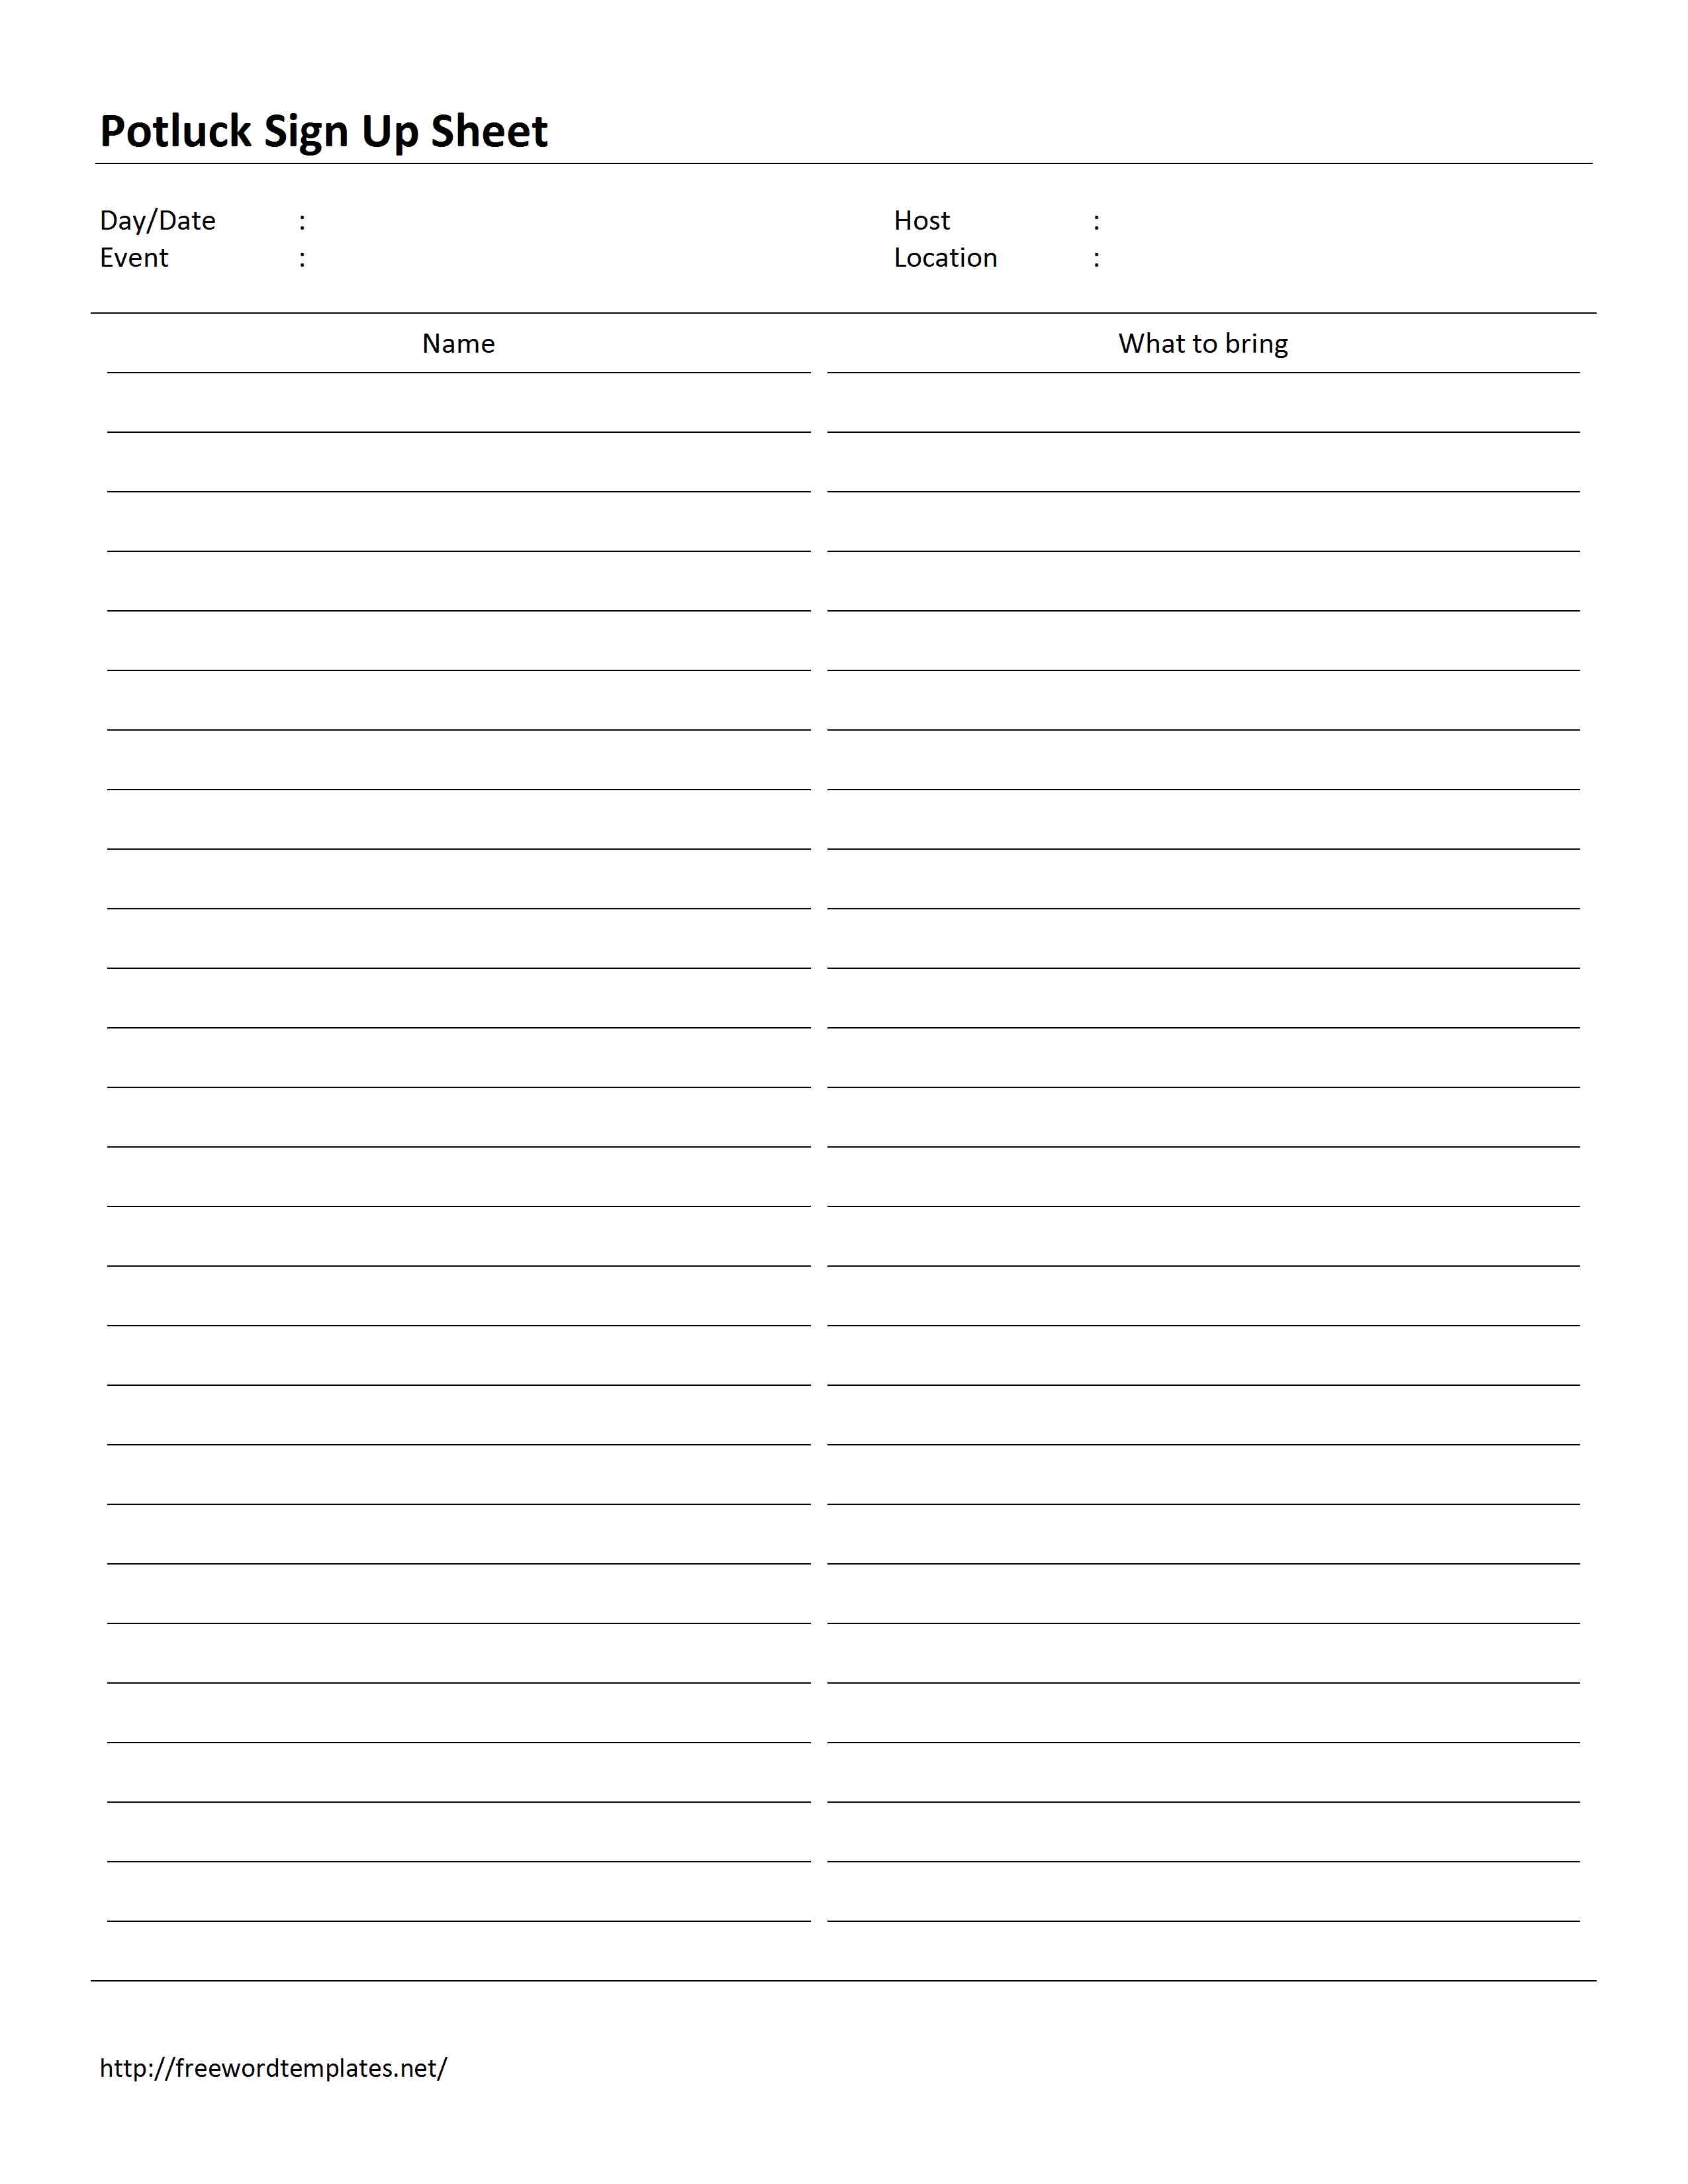 cinco-de-mayo-potluck-sign-up-sheet-template